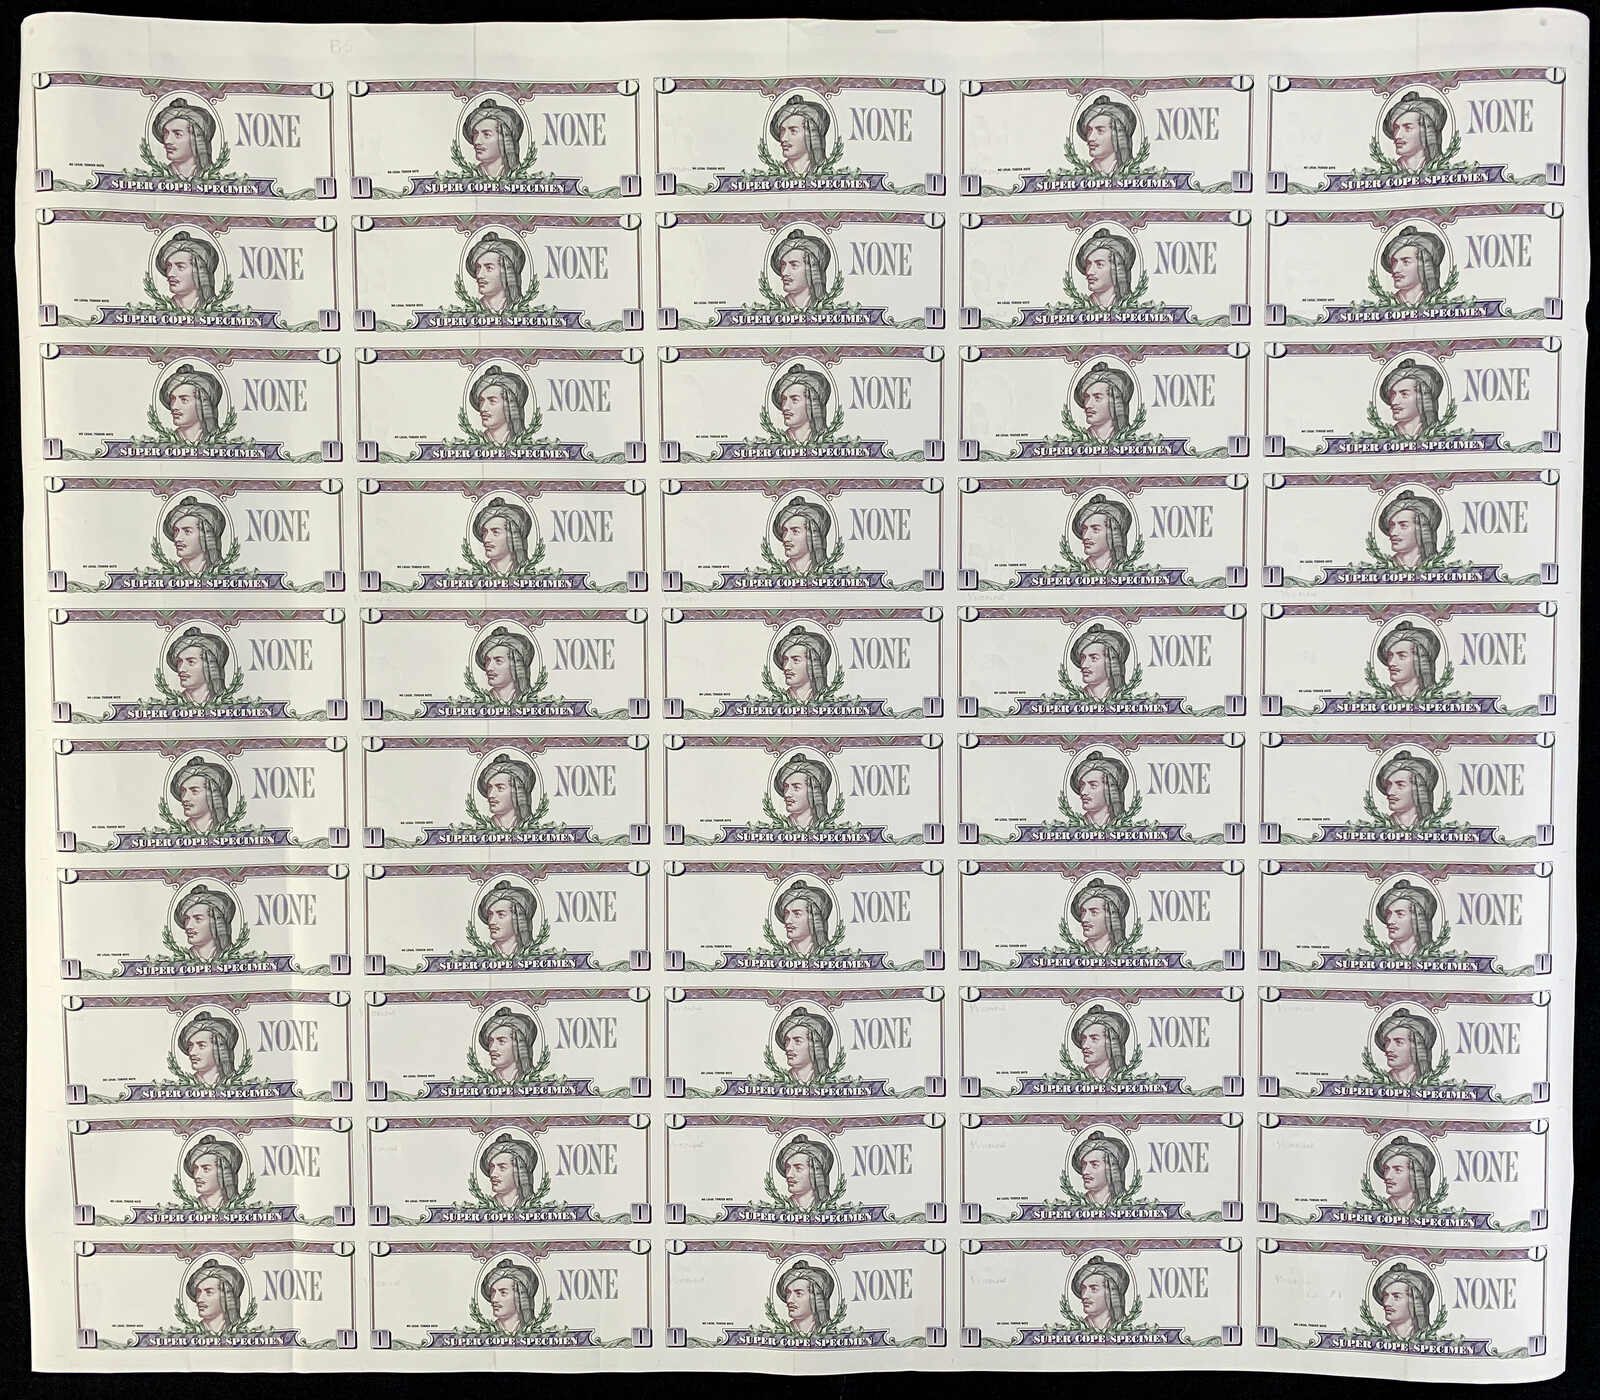 110.700: international test banknotes